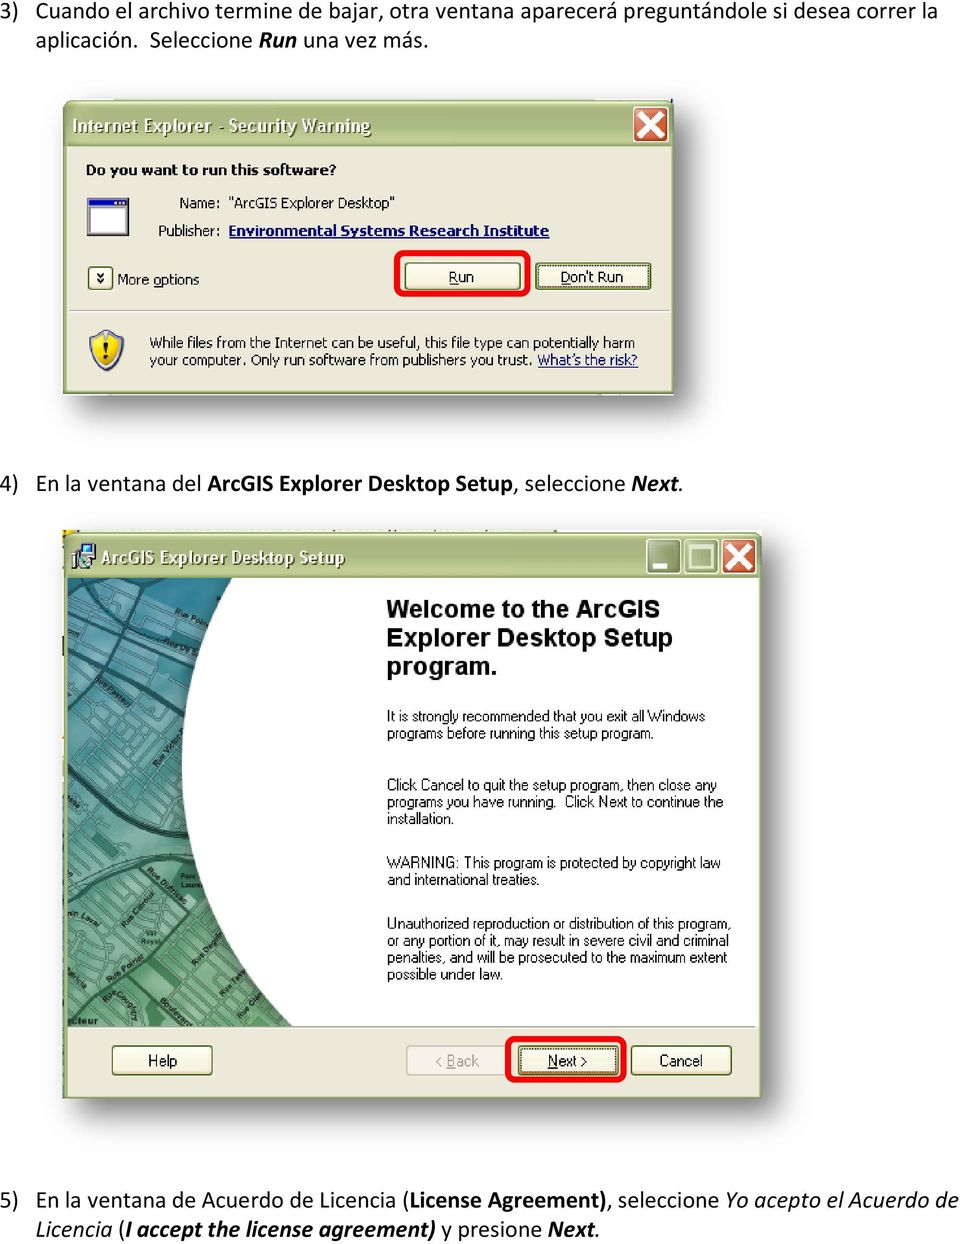 4) En la ventana del ArcGIS Explorer Desktop Setup, seleccione Next.